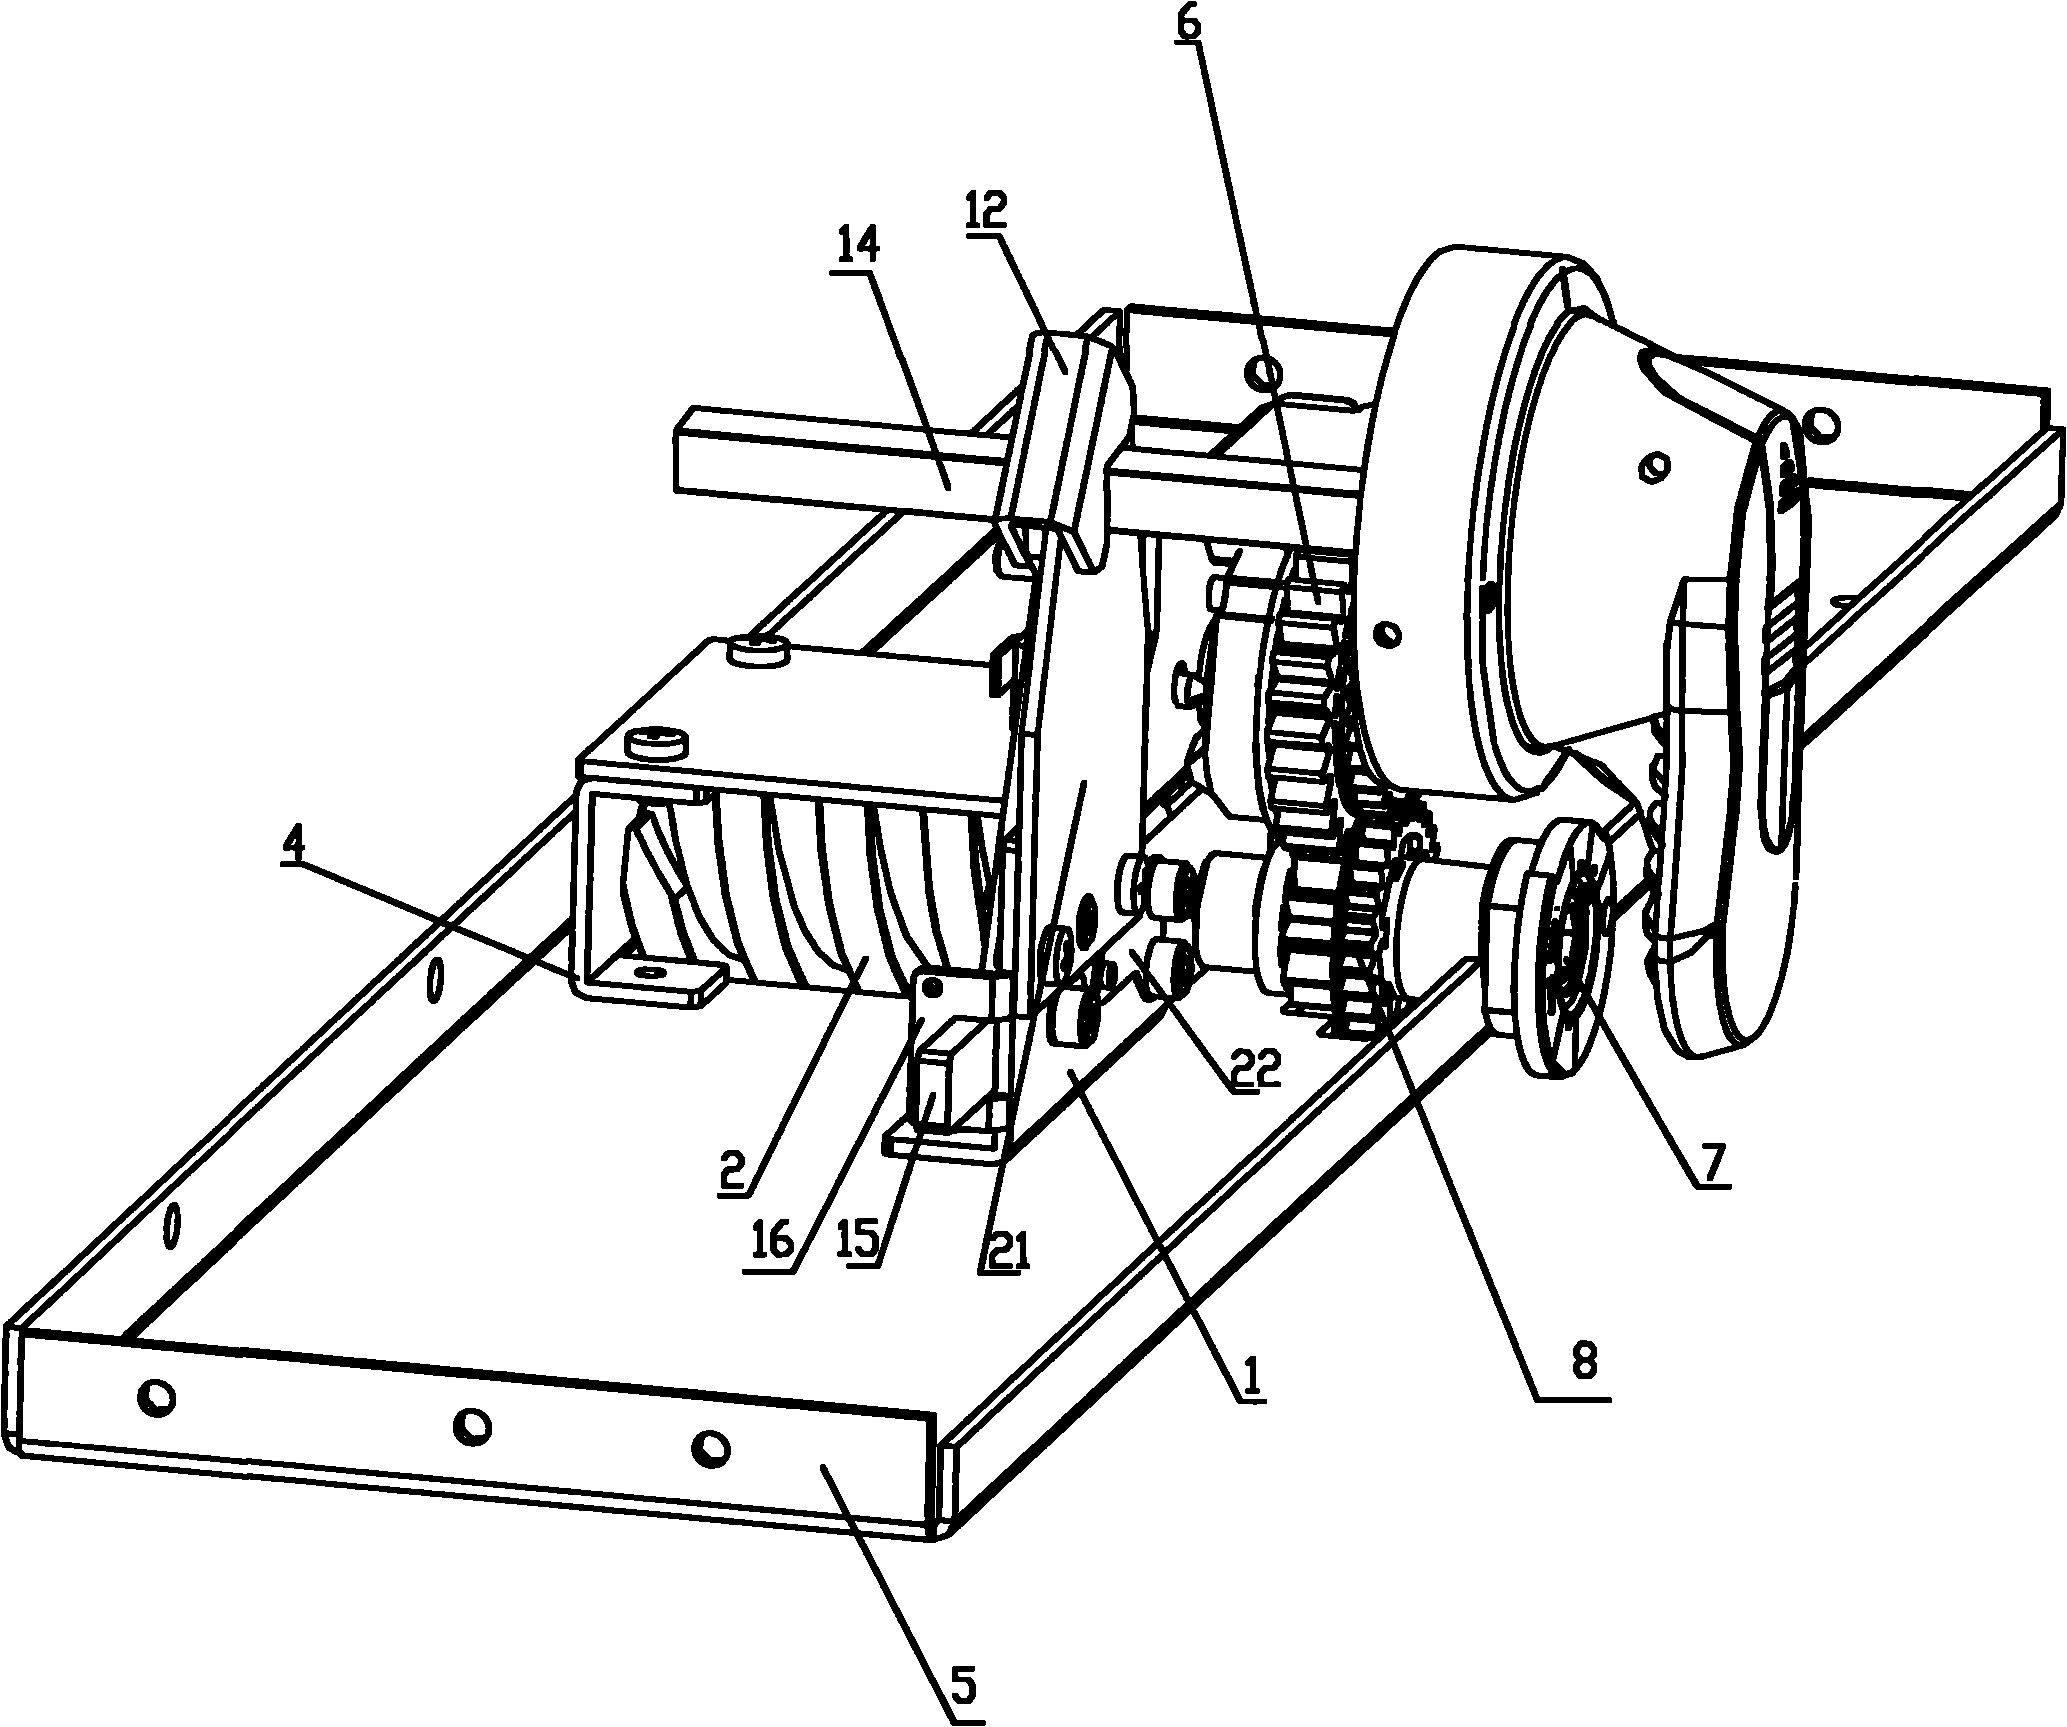 Drawer push interlocking mechanism